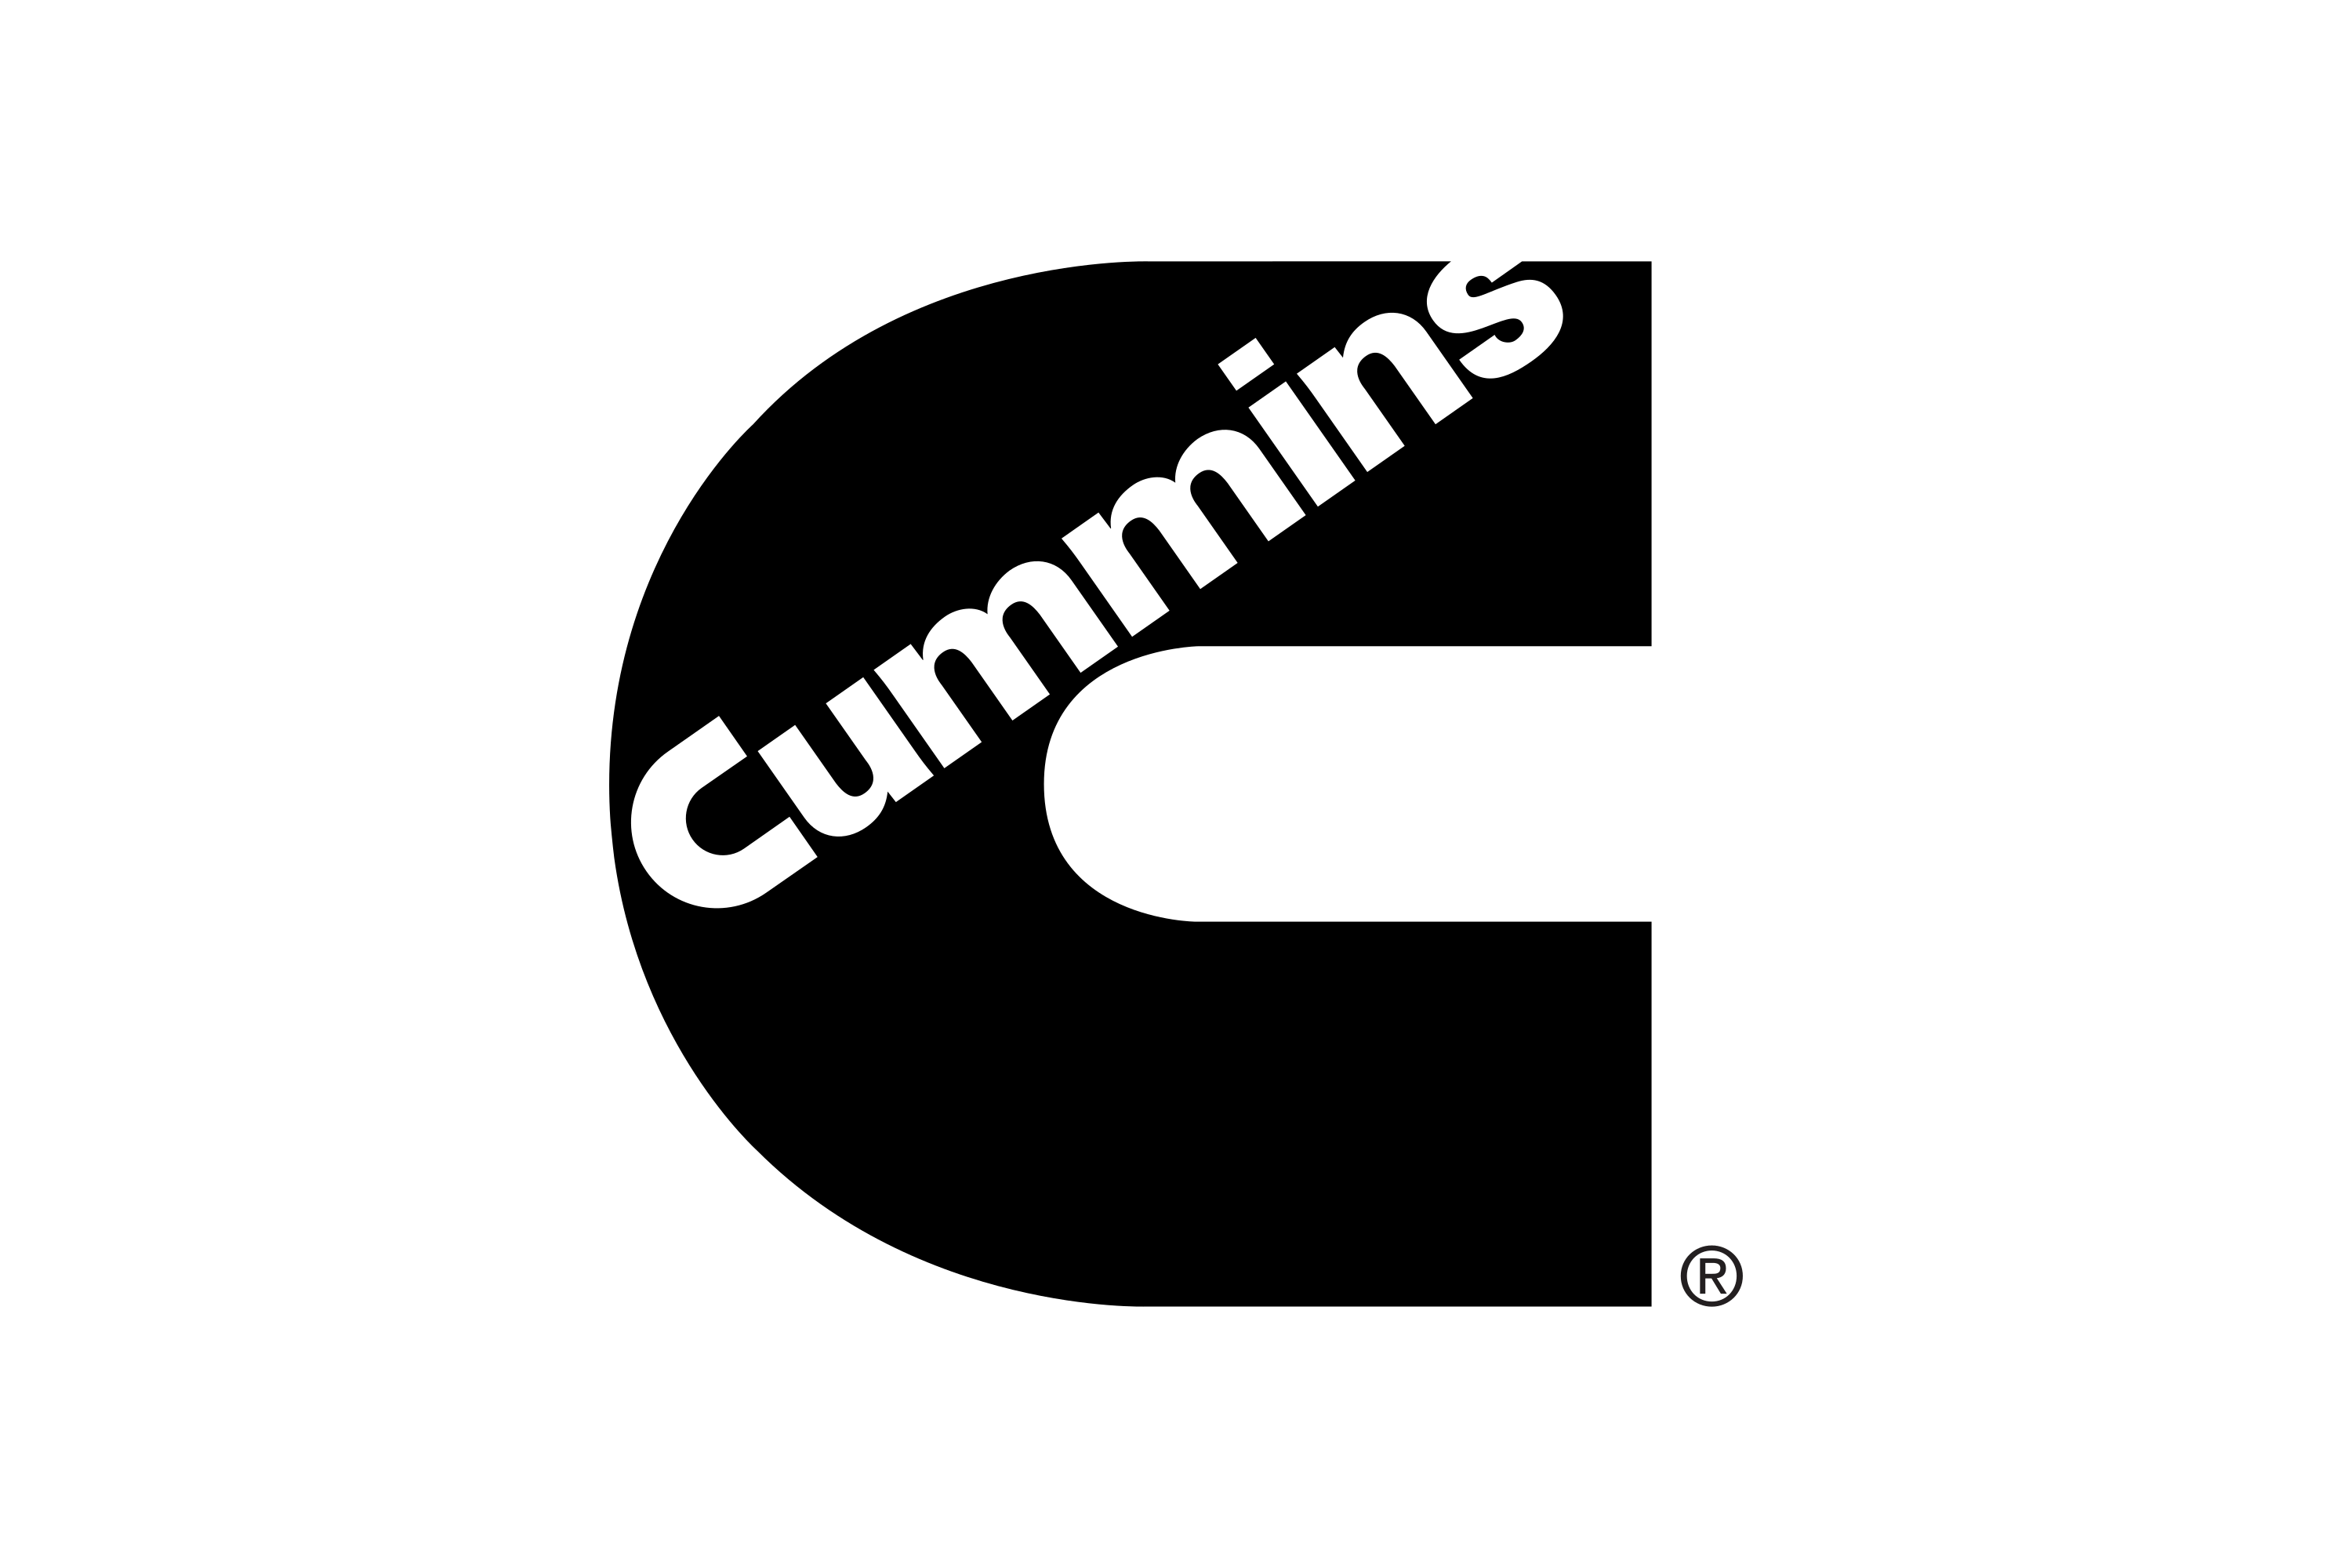 Cummins c logo cognizant retirement plan